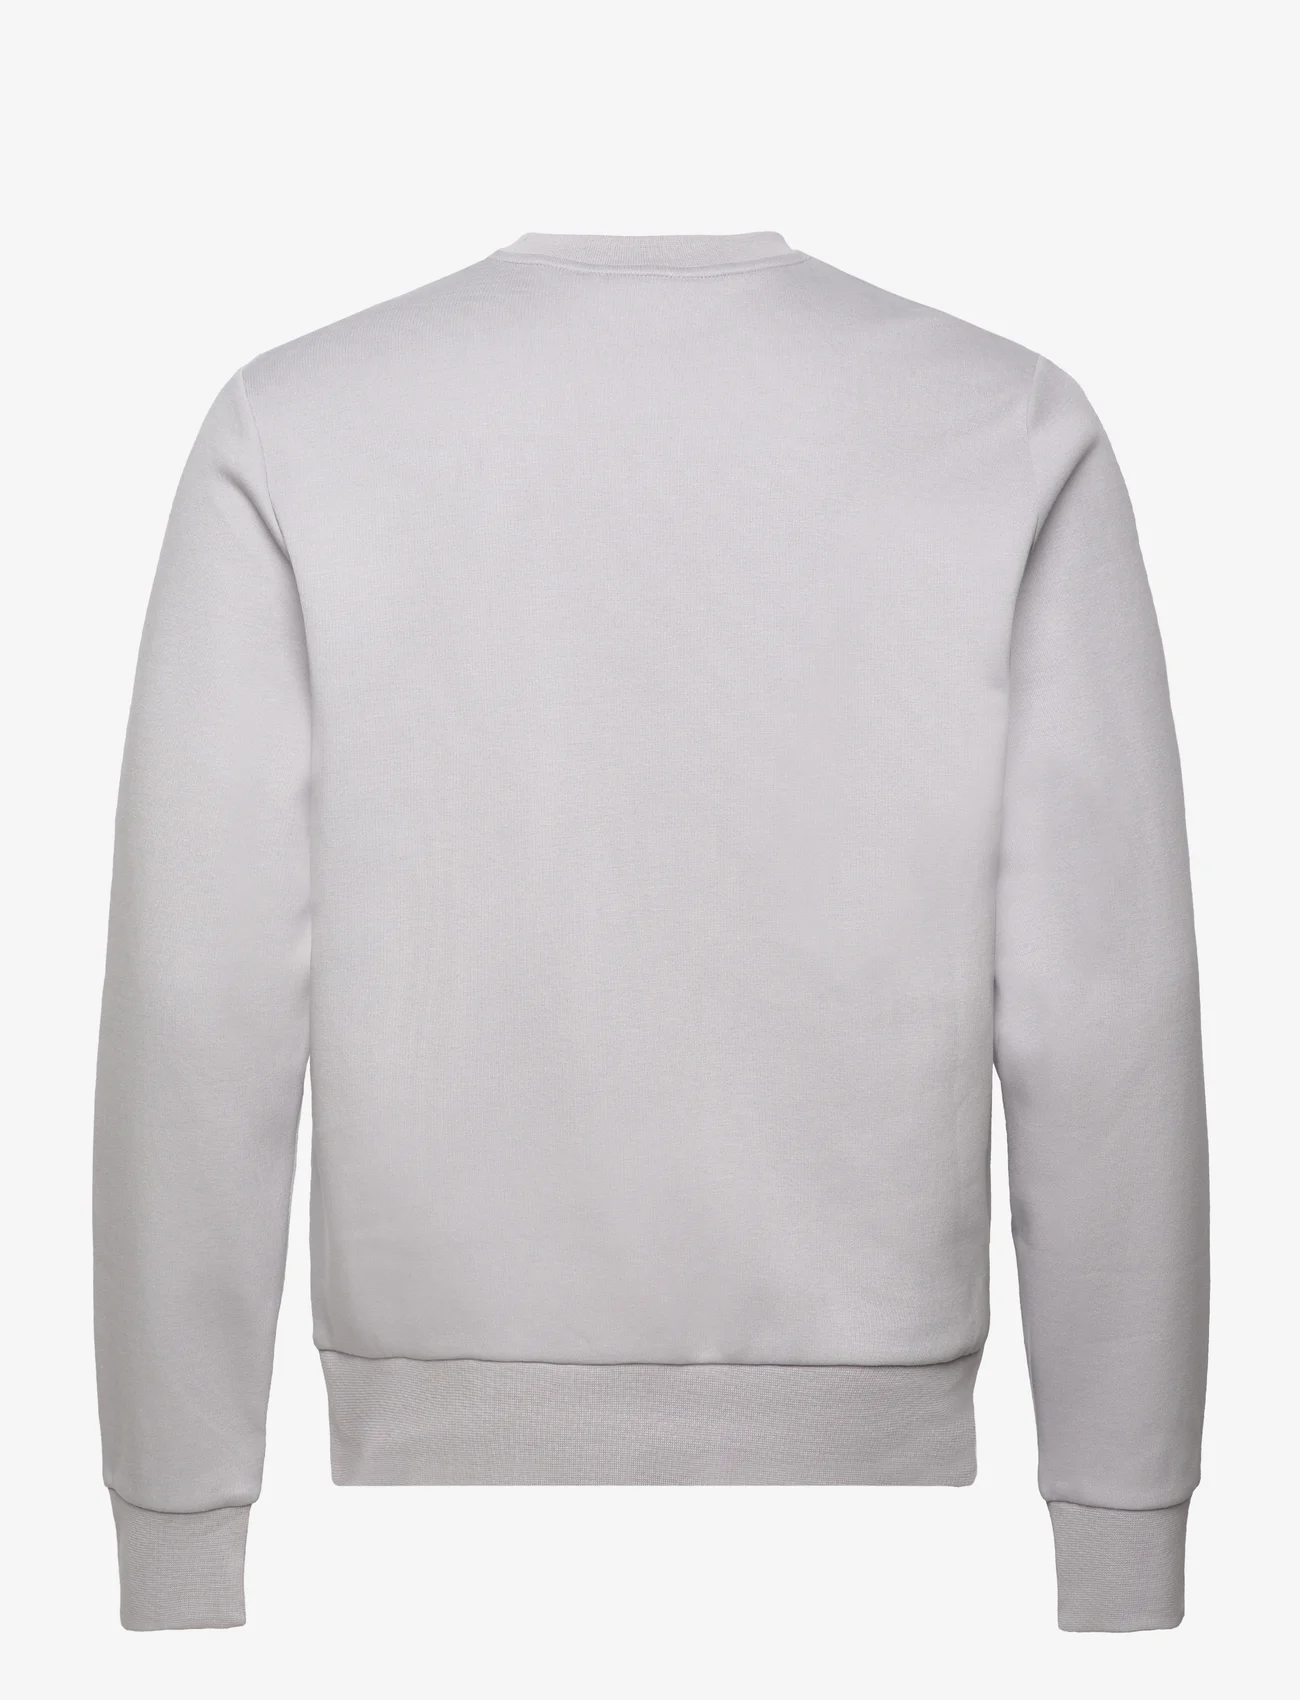 Calvin Klein - MICRO LOGO REPREVE SWEATSHIRT - truien en hoodies - silver sconce - 1